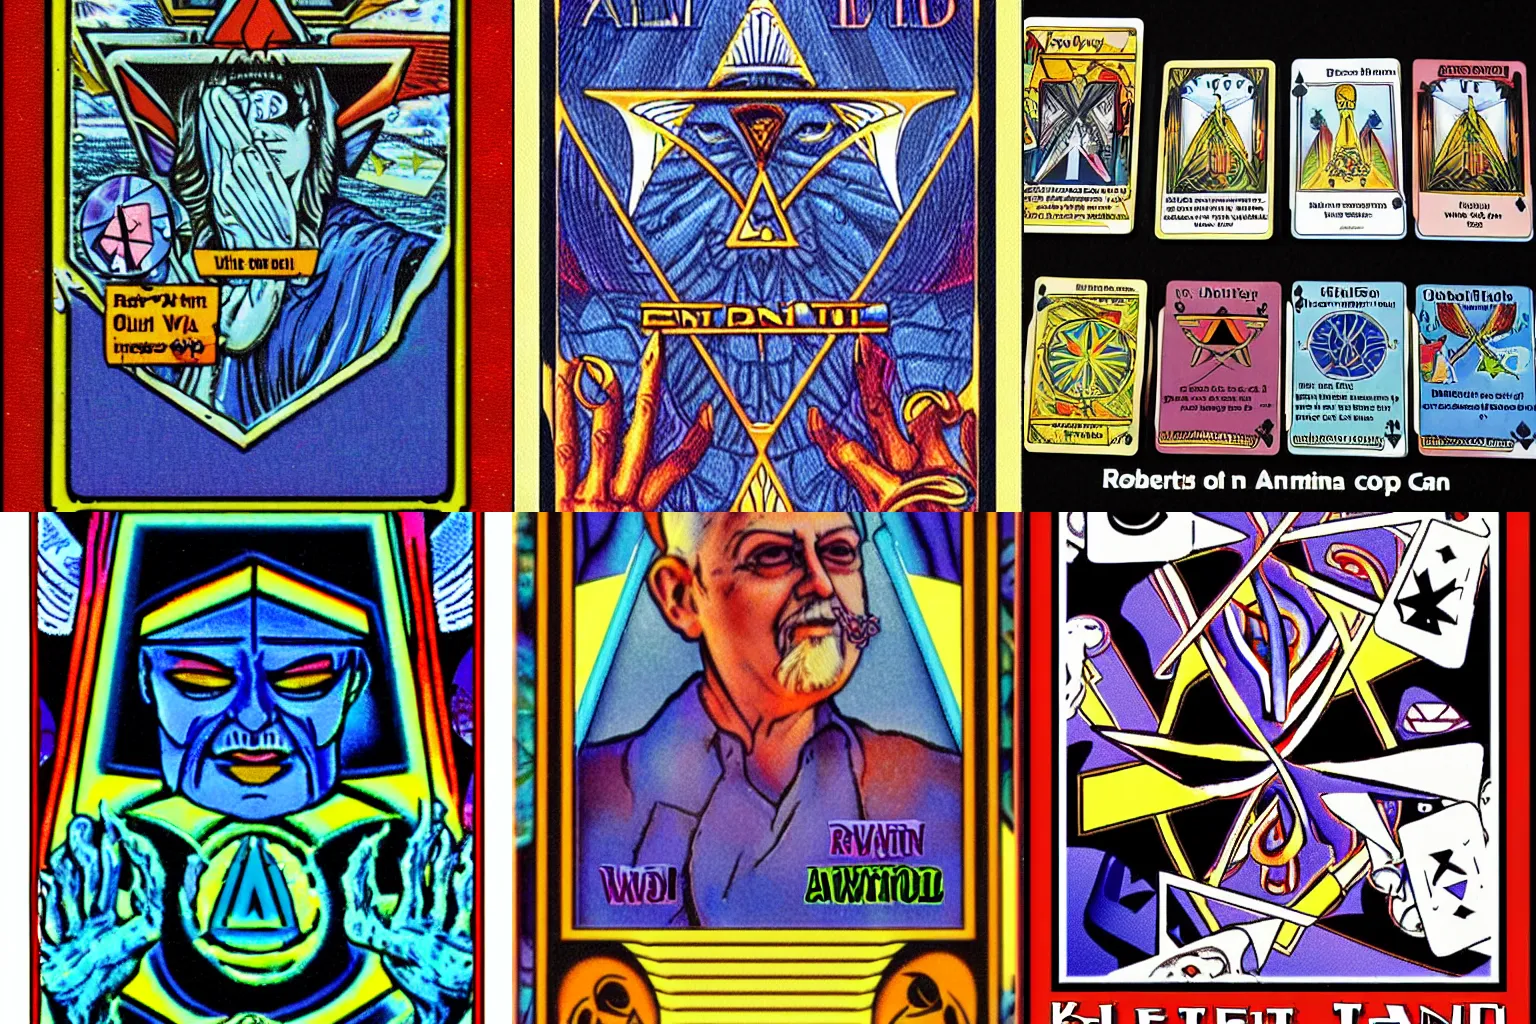 Illuminati card game by Robert Anton Wilson, Stable Diffusion